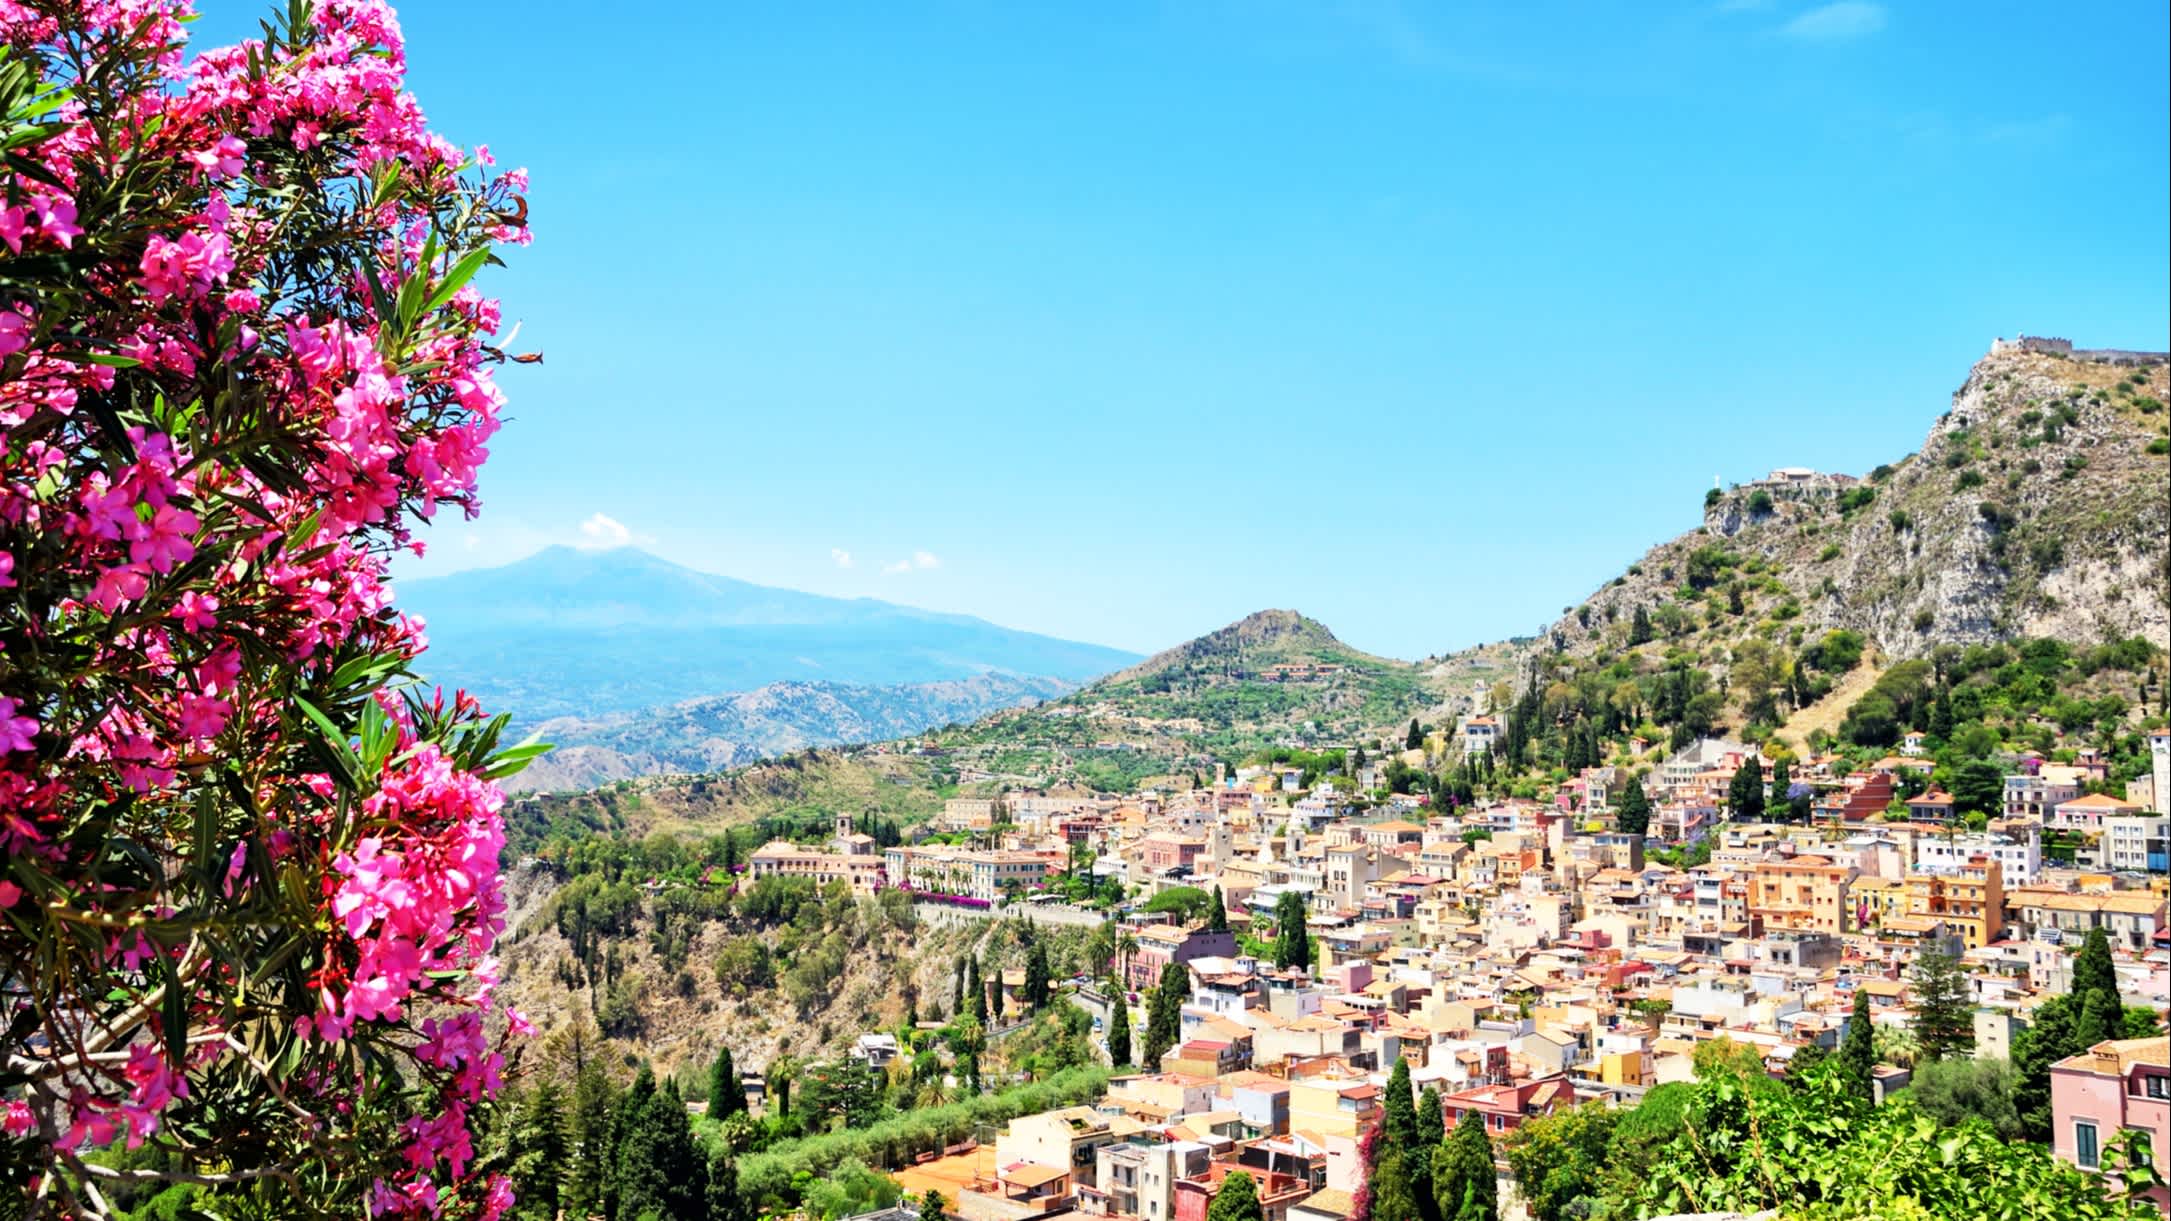 Vue panoramique de la ville de Taormine, en Sicile, en Italie